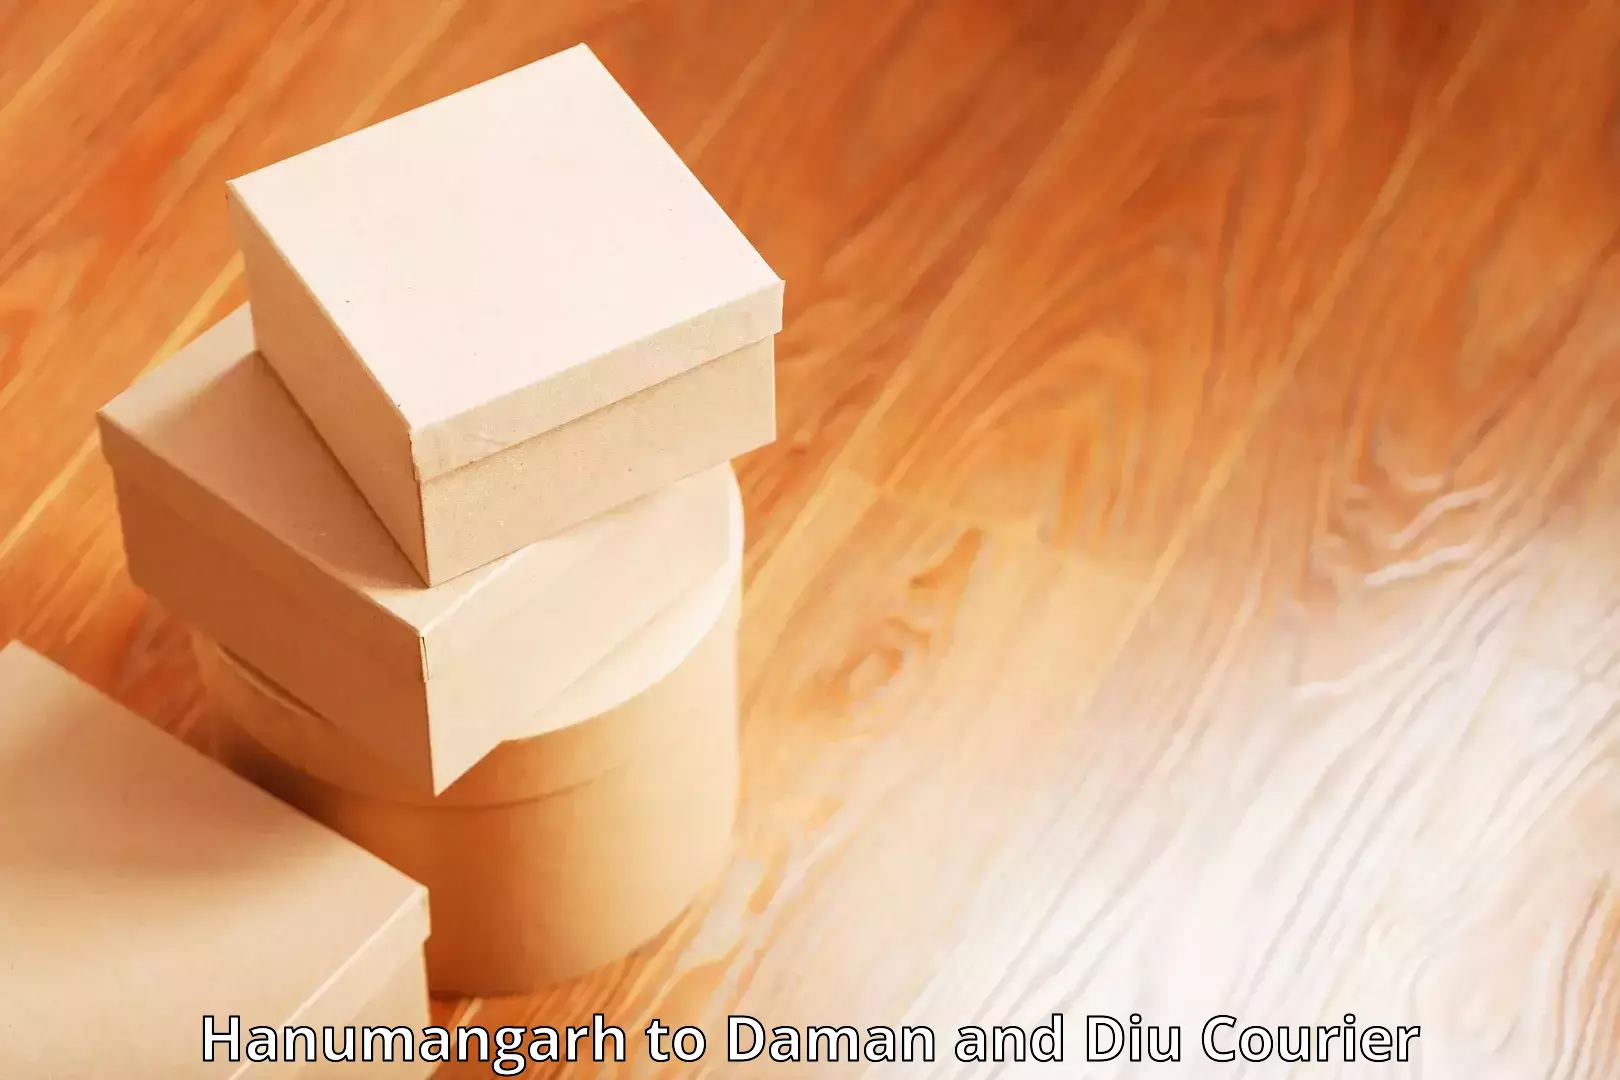 Custom courier packaging Hanumangarh to Daman